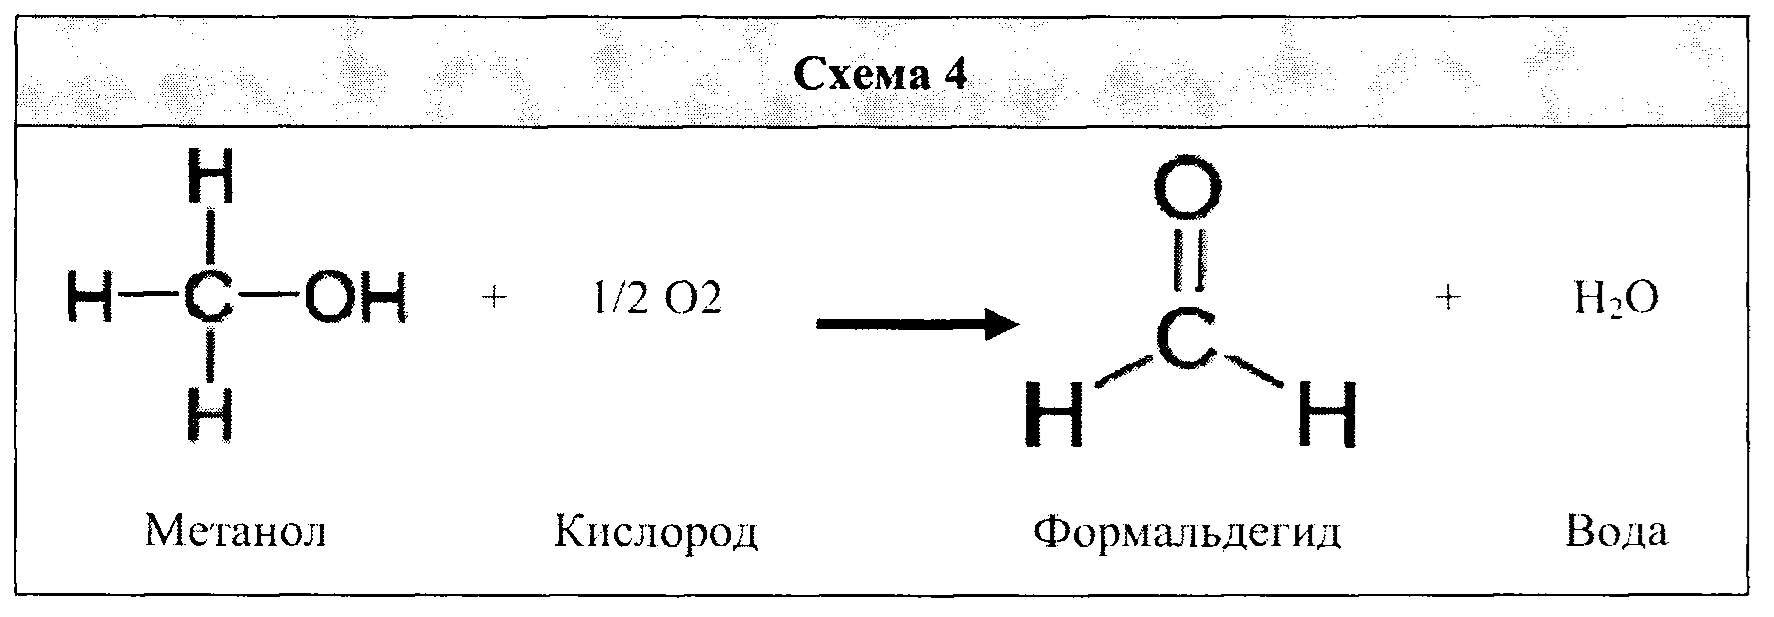 Ацетальдегид метанол реакция. Ацетальдегид и метанол. Ацетальдегид и вода. Технологическая схема формальдегида и ацетальдегида. Ацетальдегид и метанол реакция.